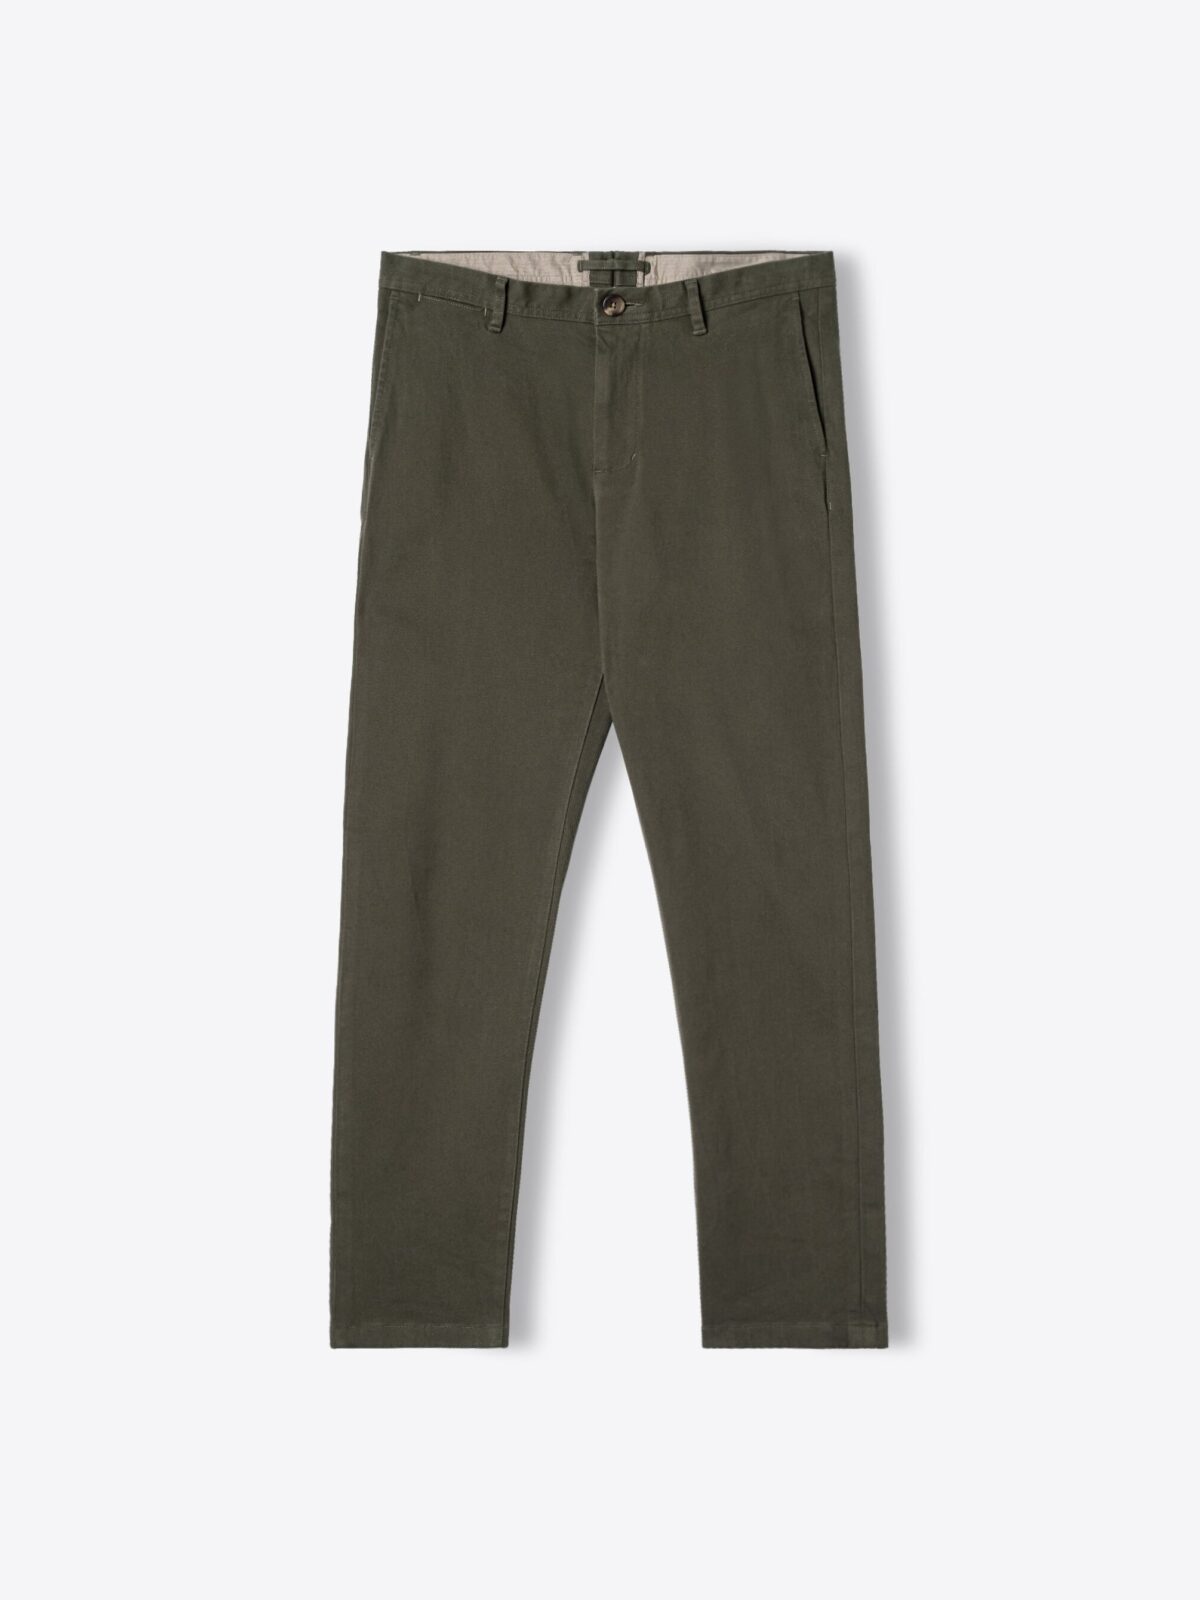 Stratton Pine Stretch Corduroy Chino - Custom Fit Pants